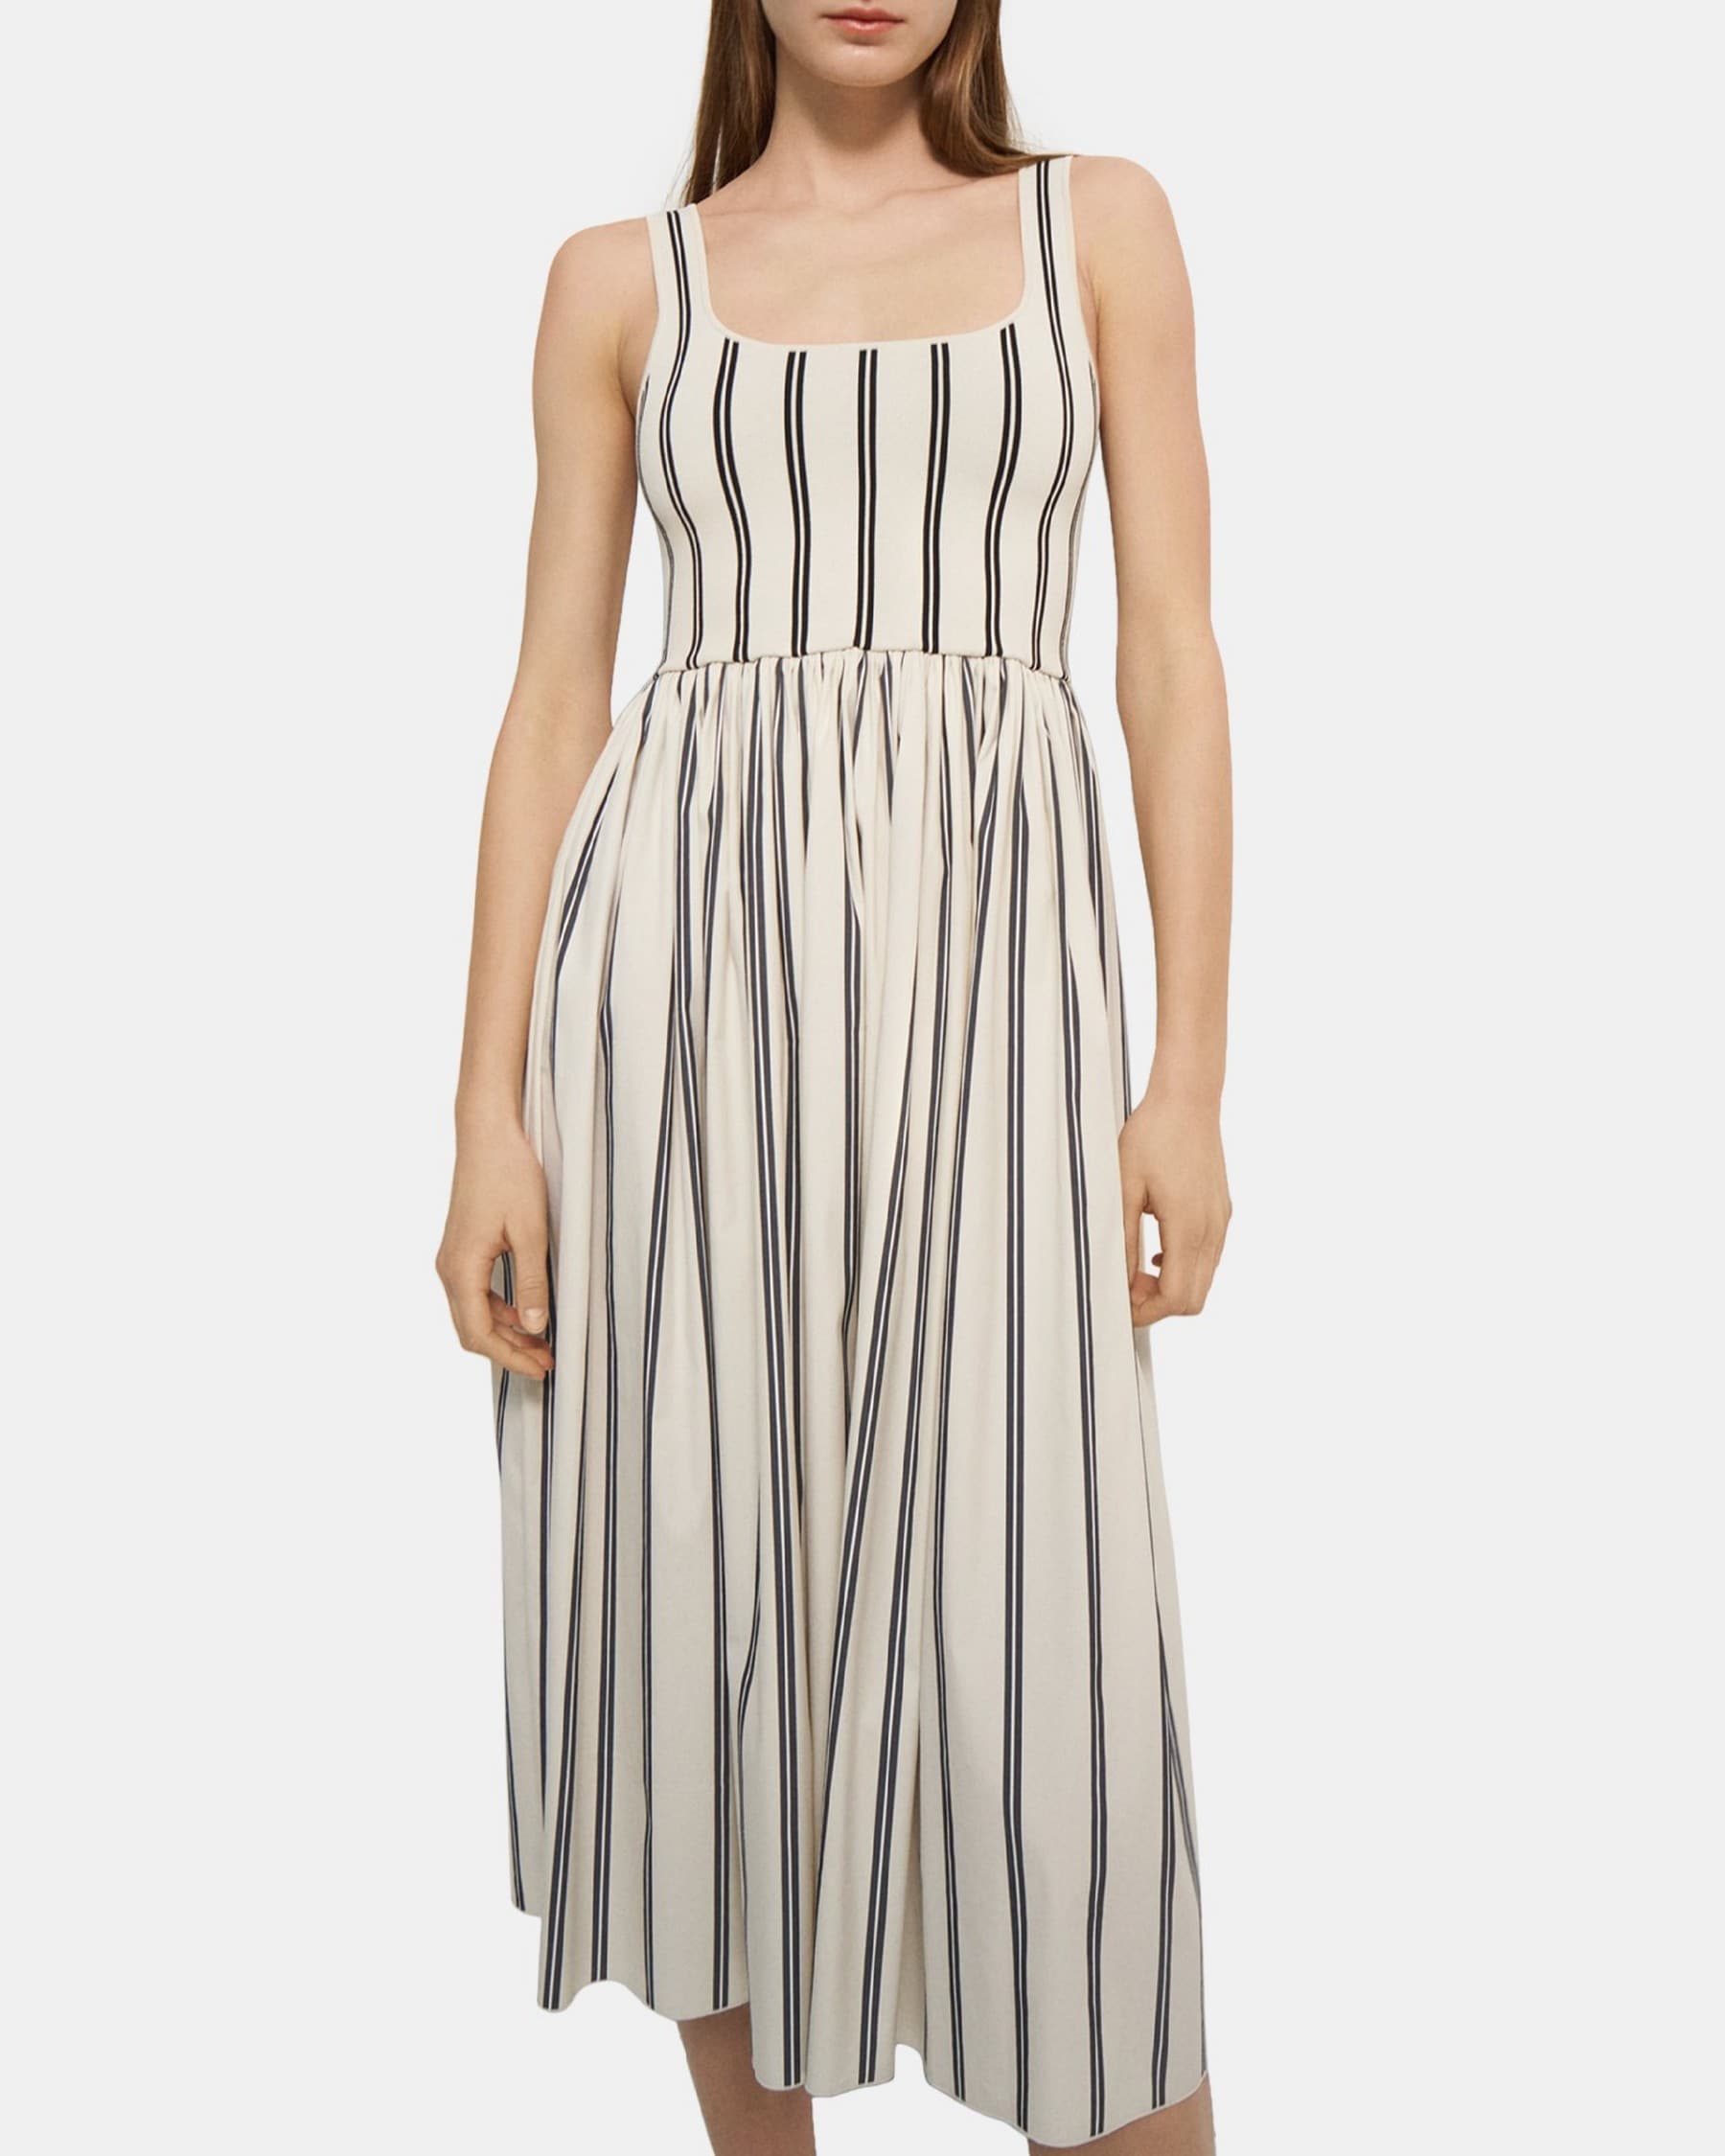 Sleeveless Dress in Striped Stretch Knit